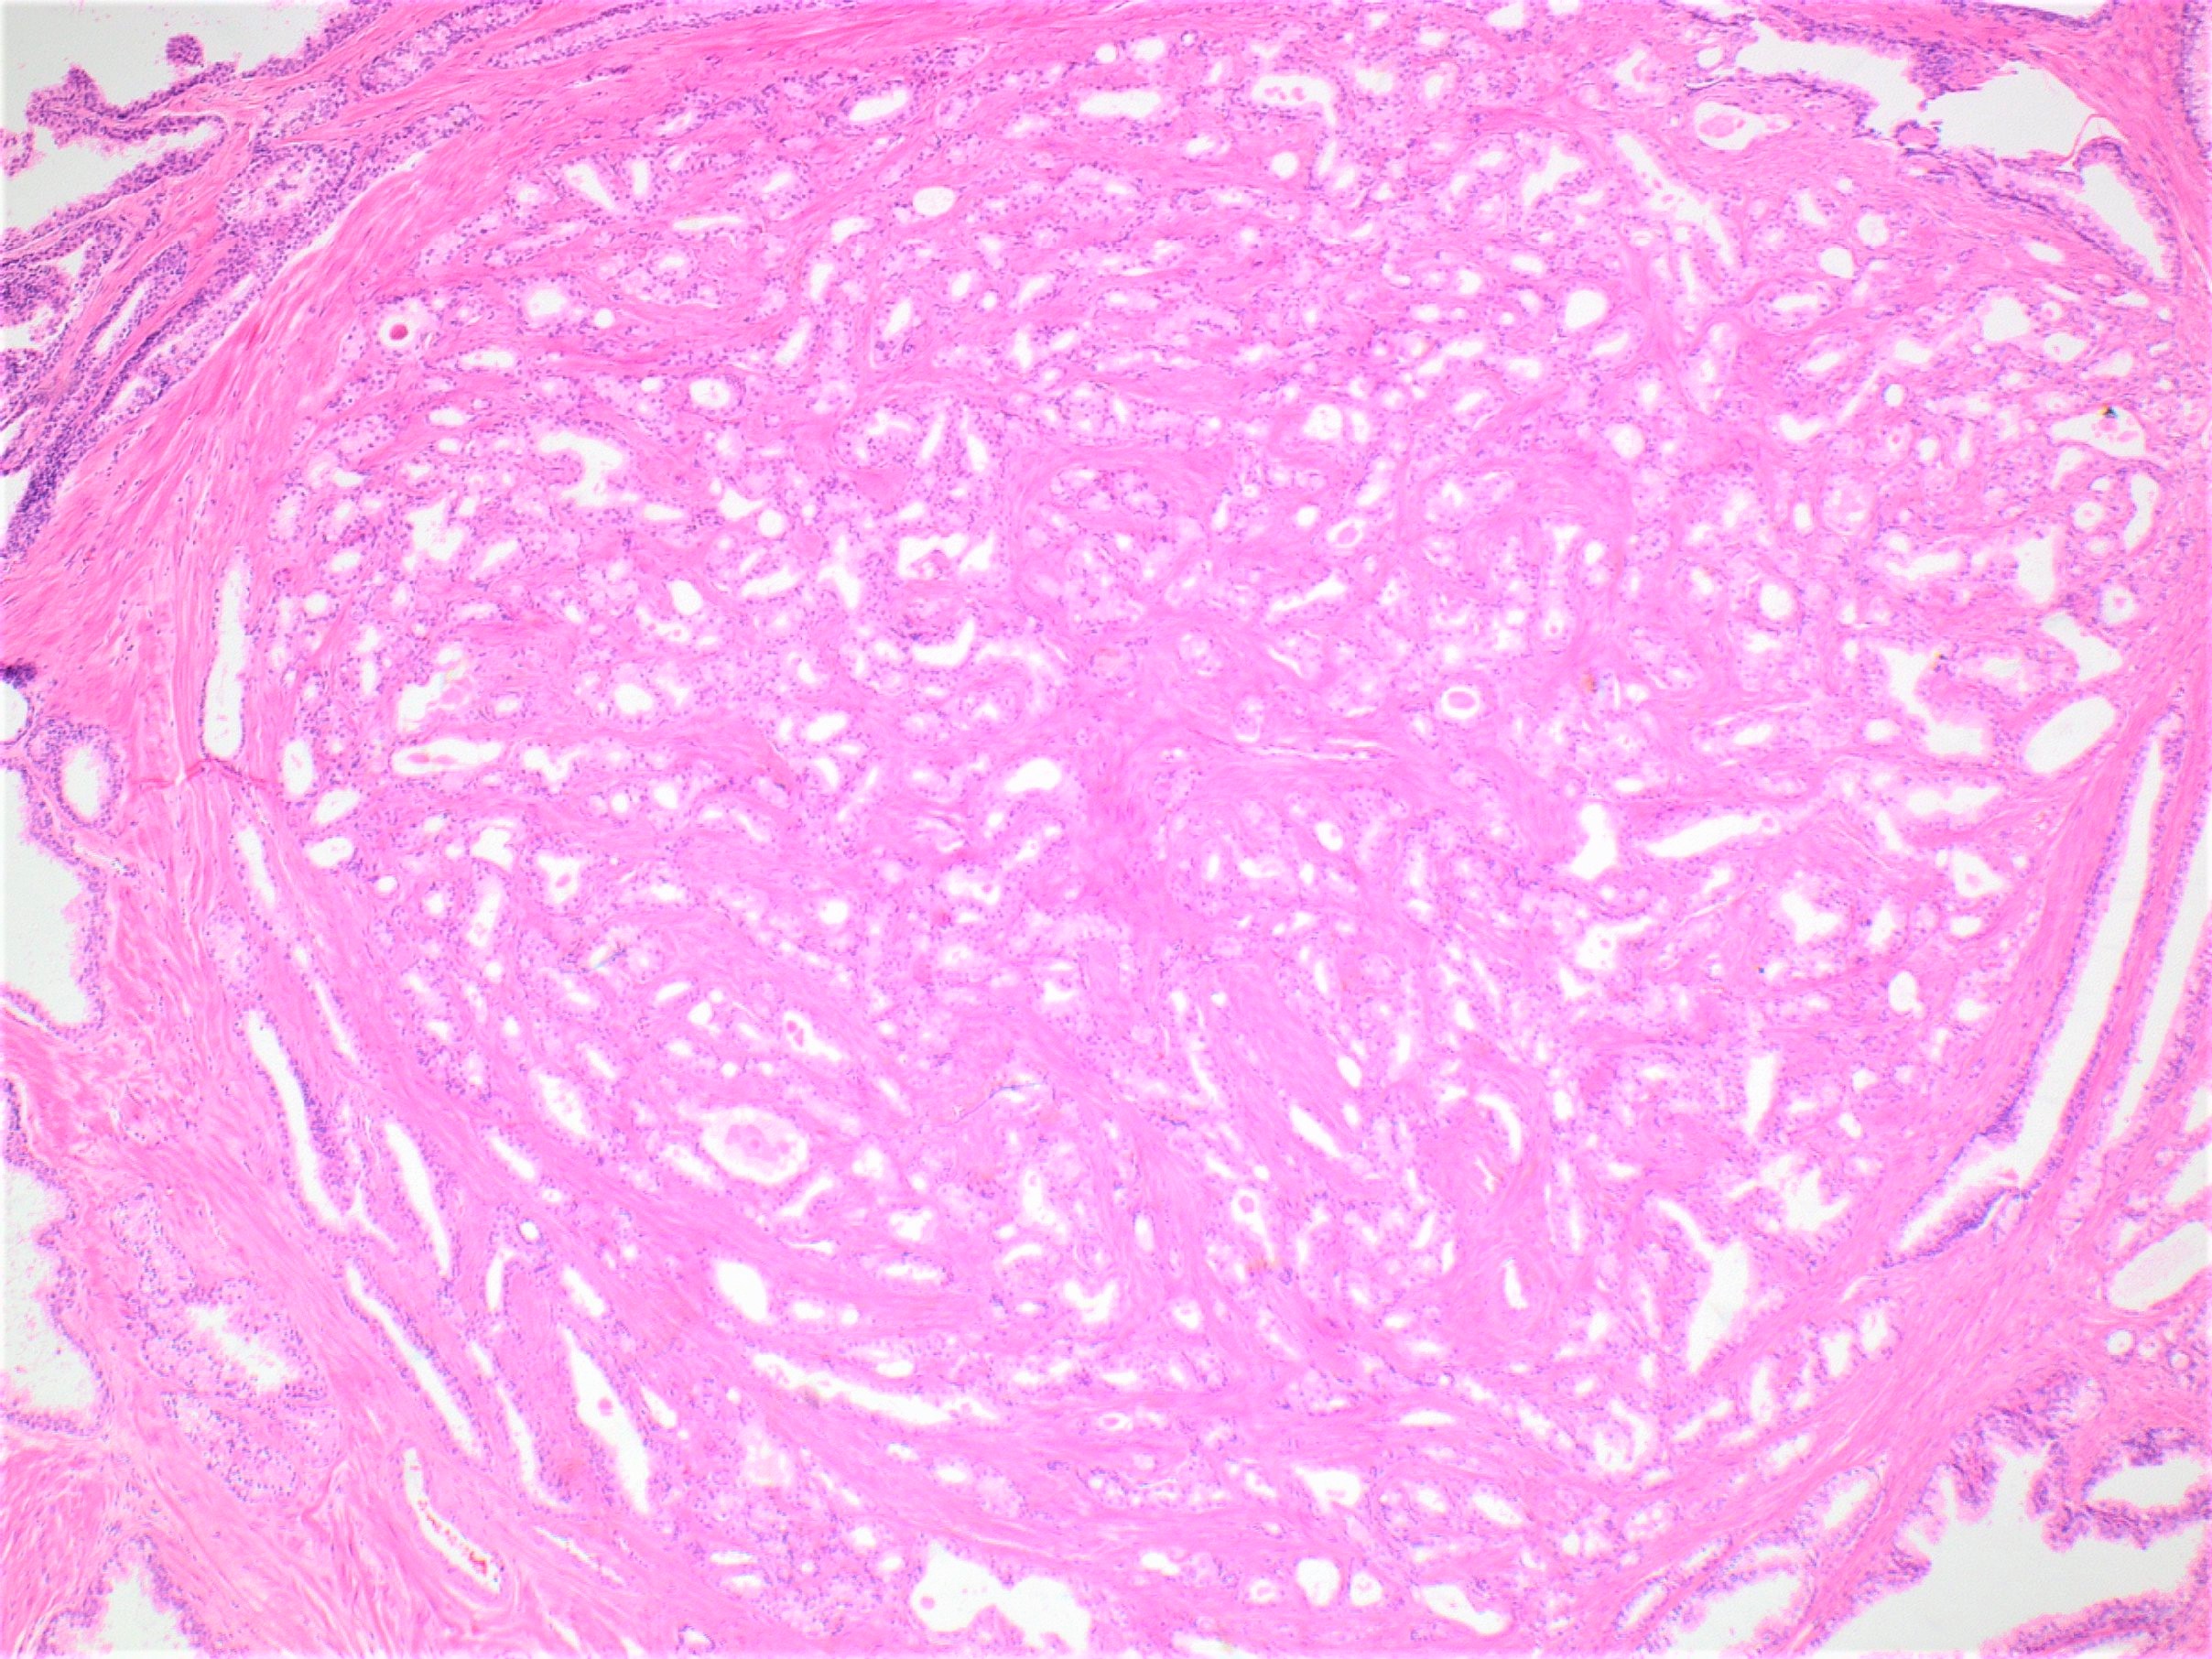 benign adenomyomatous hyperplasia of prostate icd 10